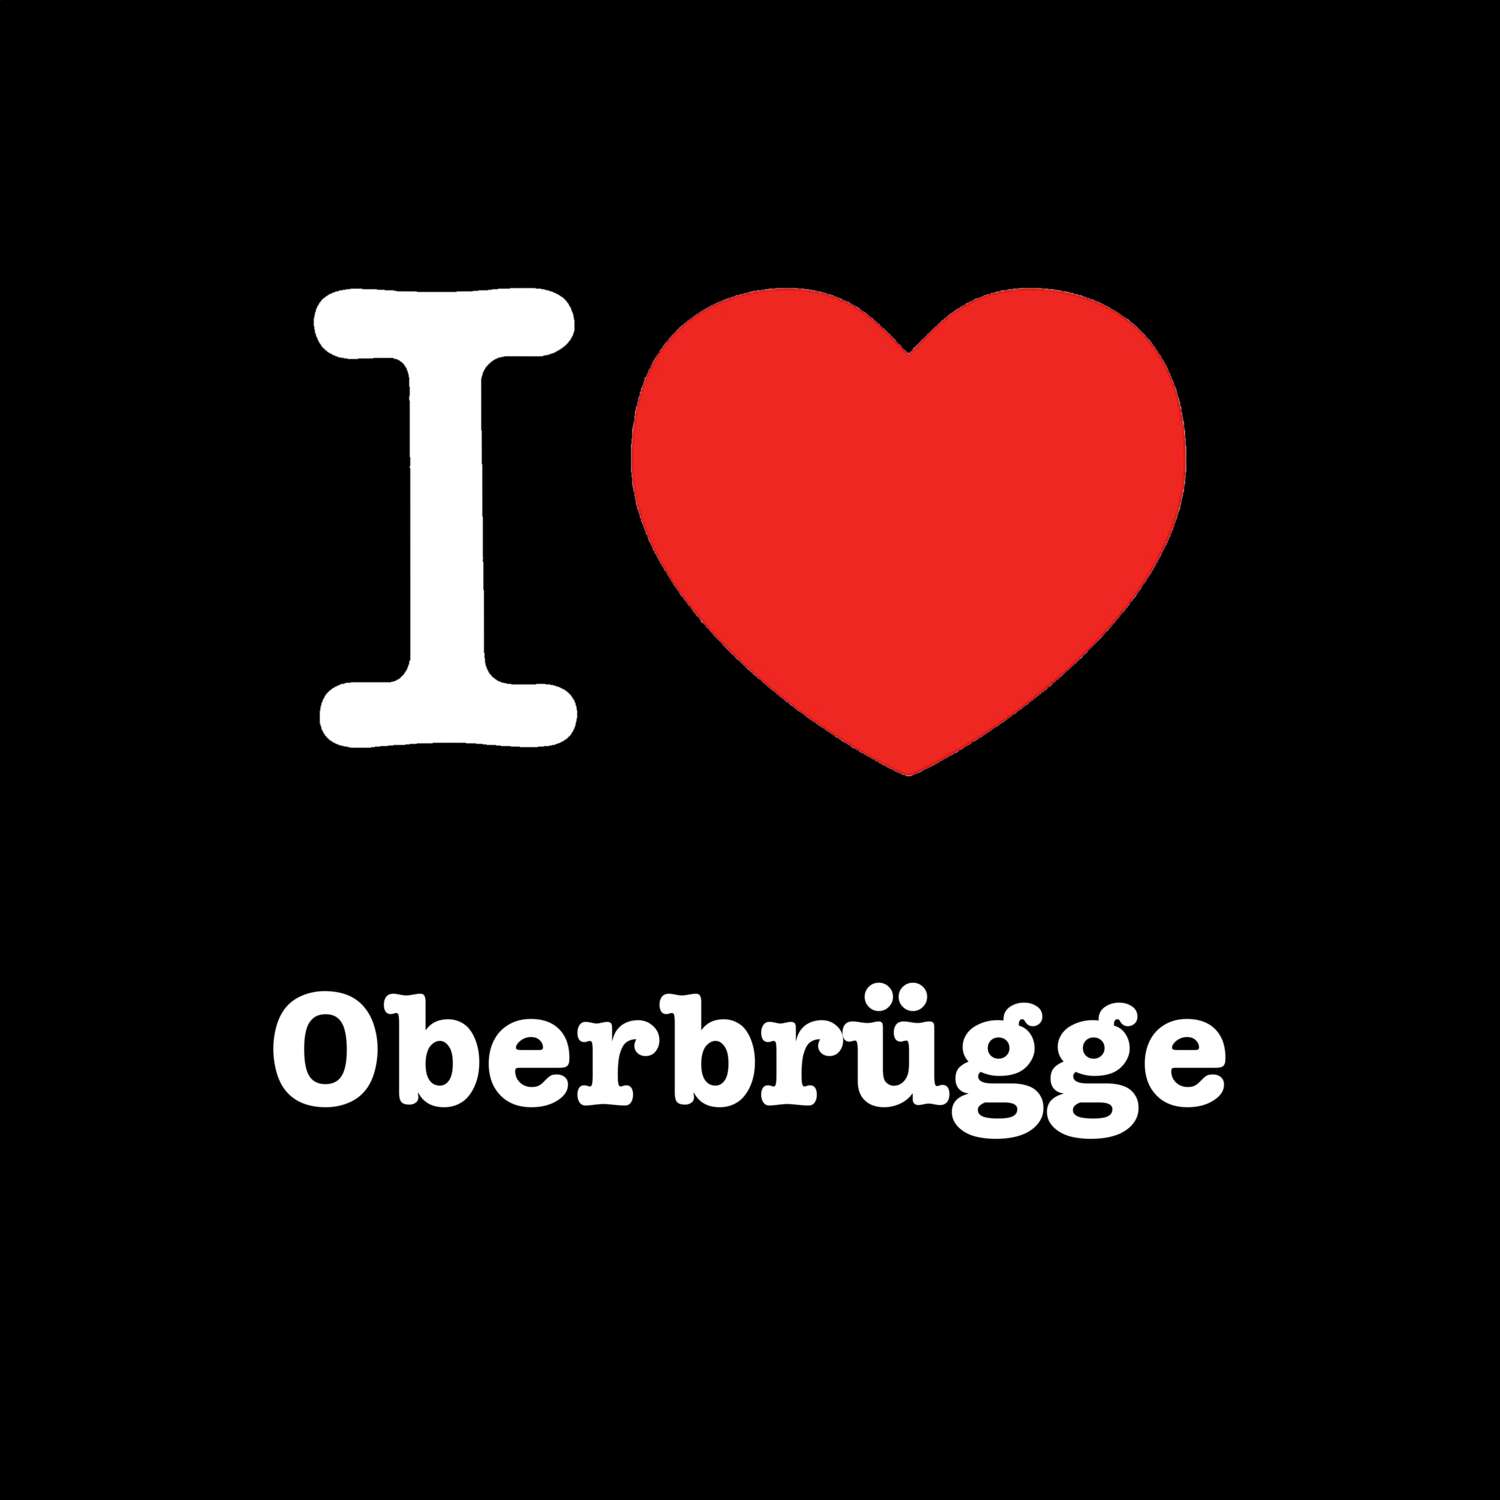 Oberbrügge T-Shirt »I love«